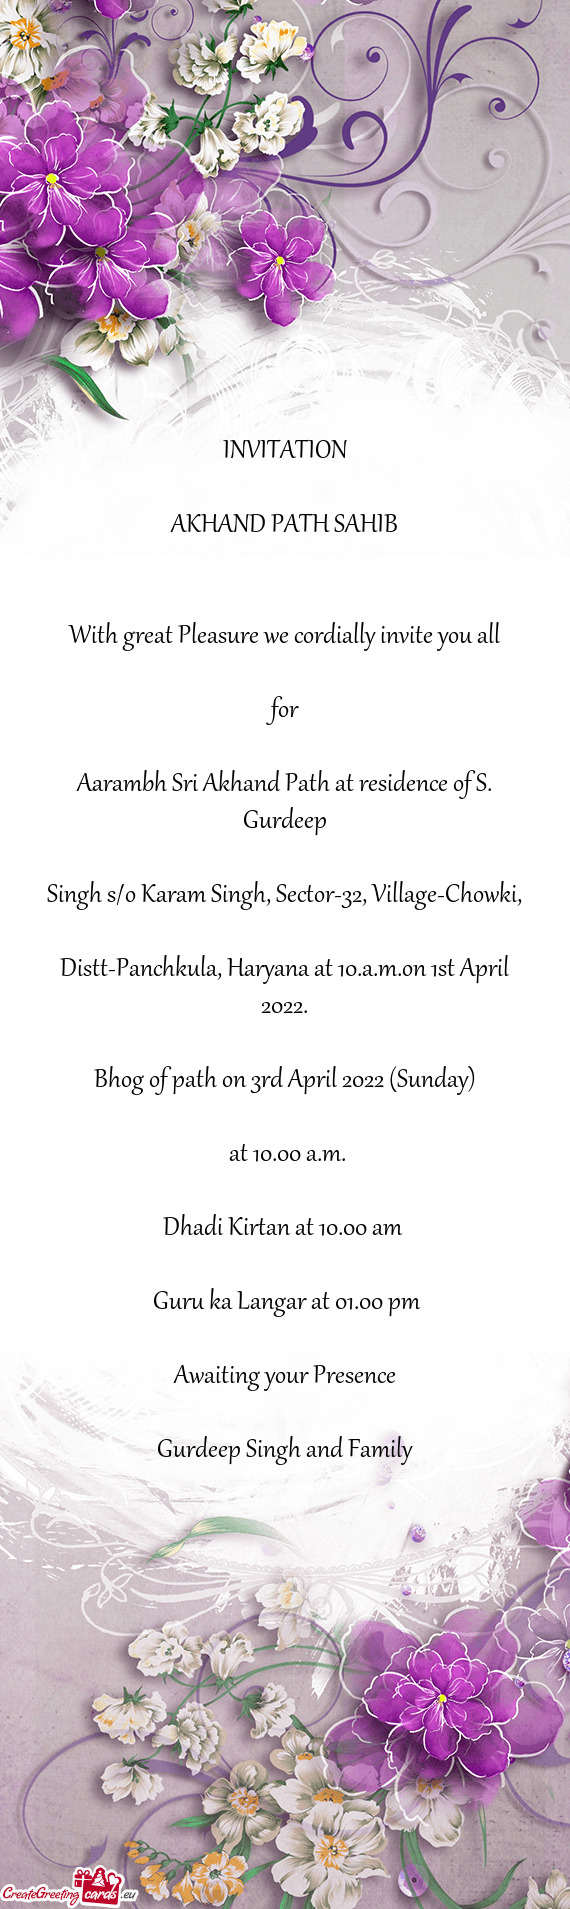 Aarambh Sri Akhand Path at residence of S. Gurdeep